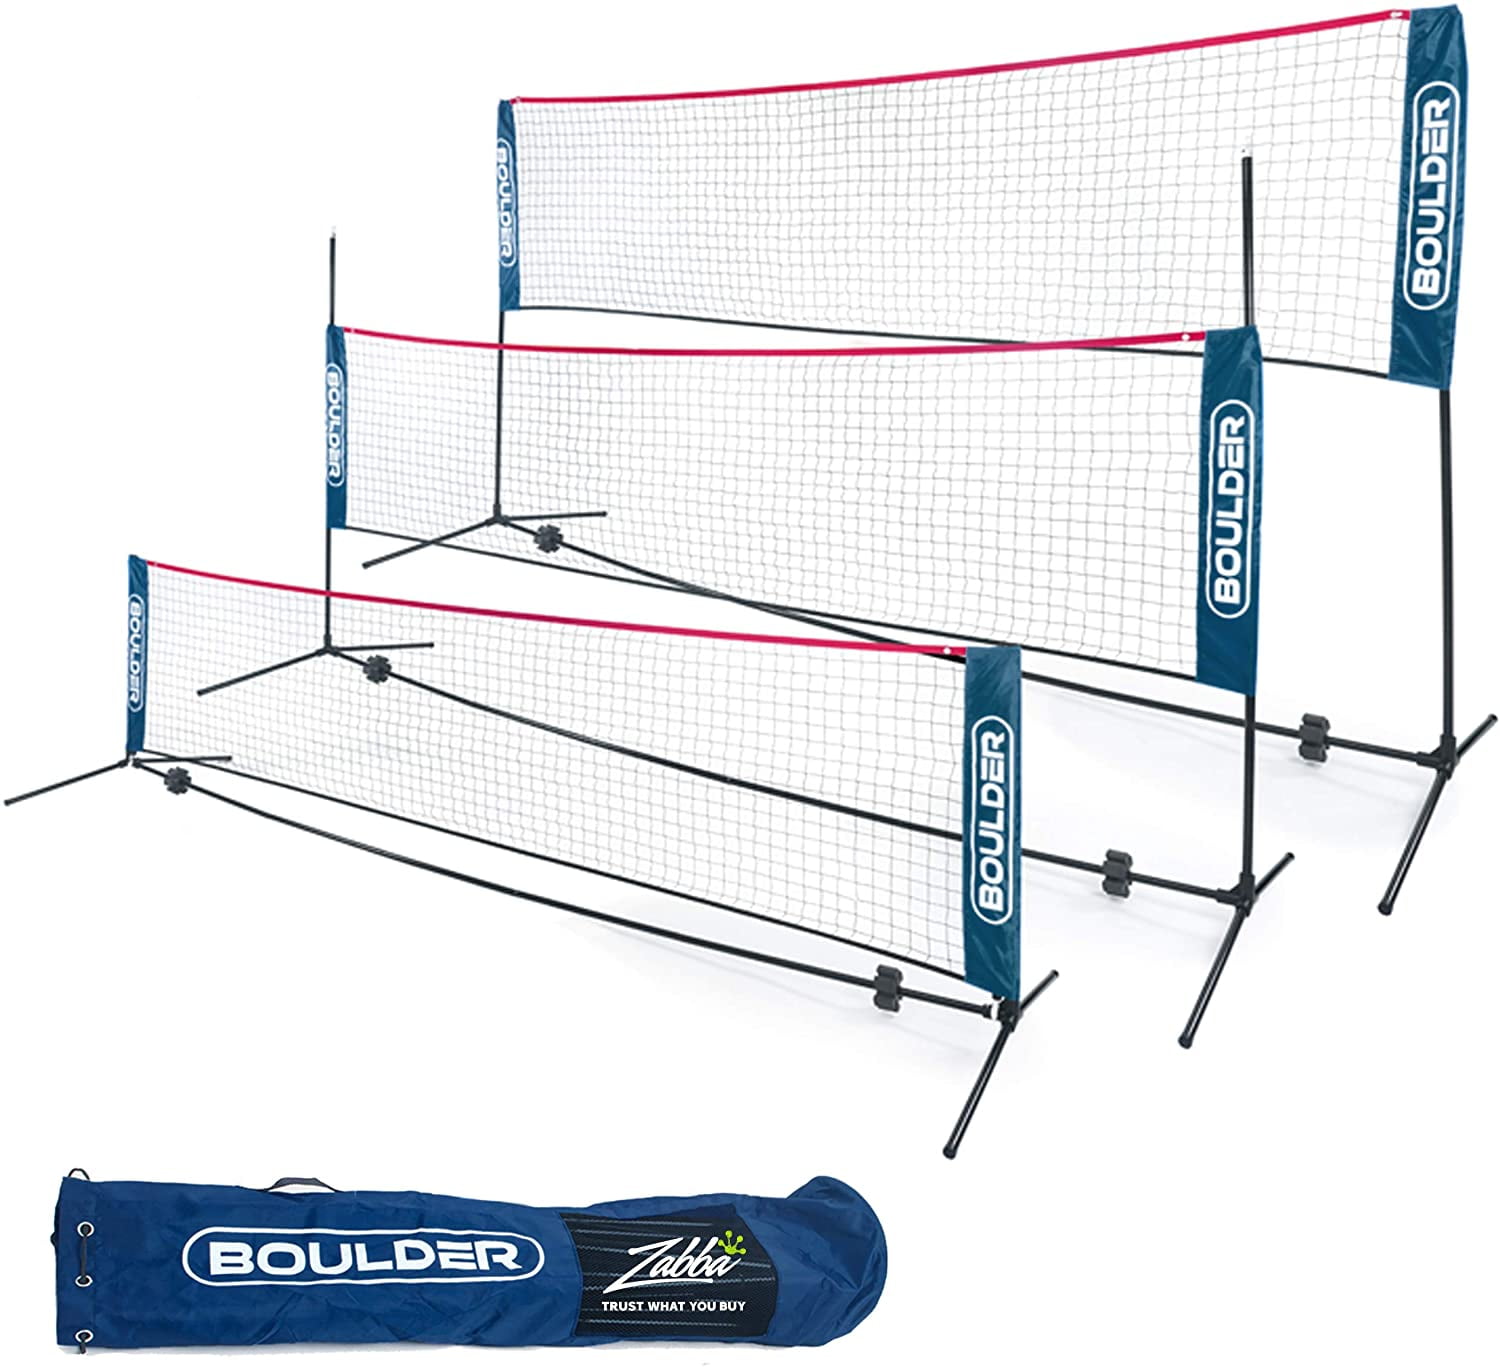 Badminton Set Badminton 4 Racket+Birdies+Net+Adjustable Polls Backyard Game O7L2 